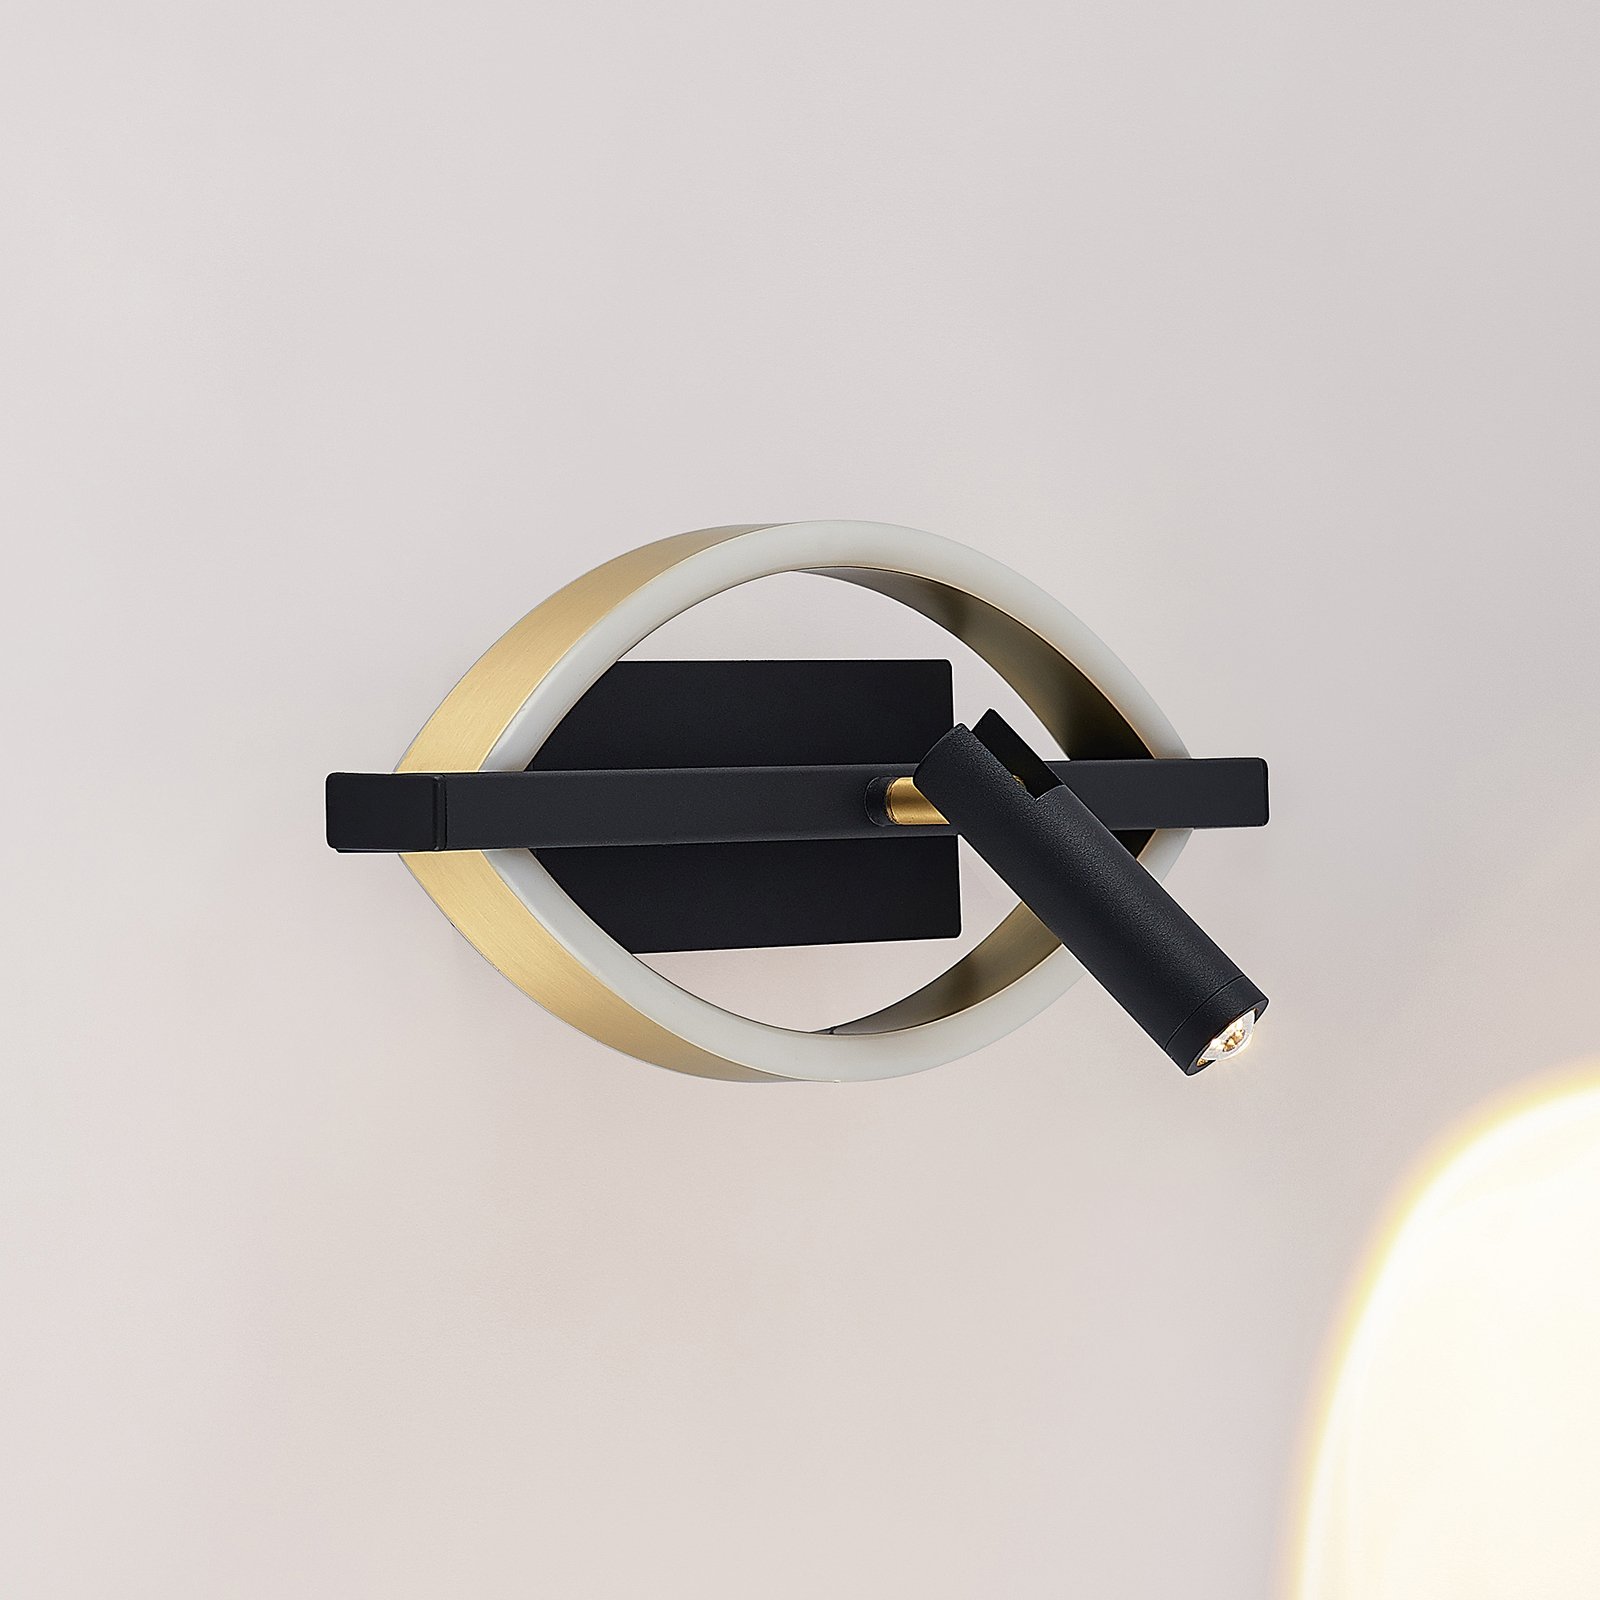 Lucande Matwei LED-Wandlampe, oval, messing